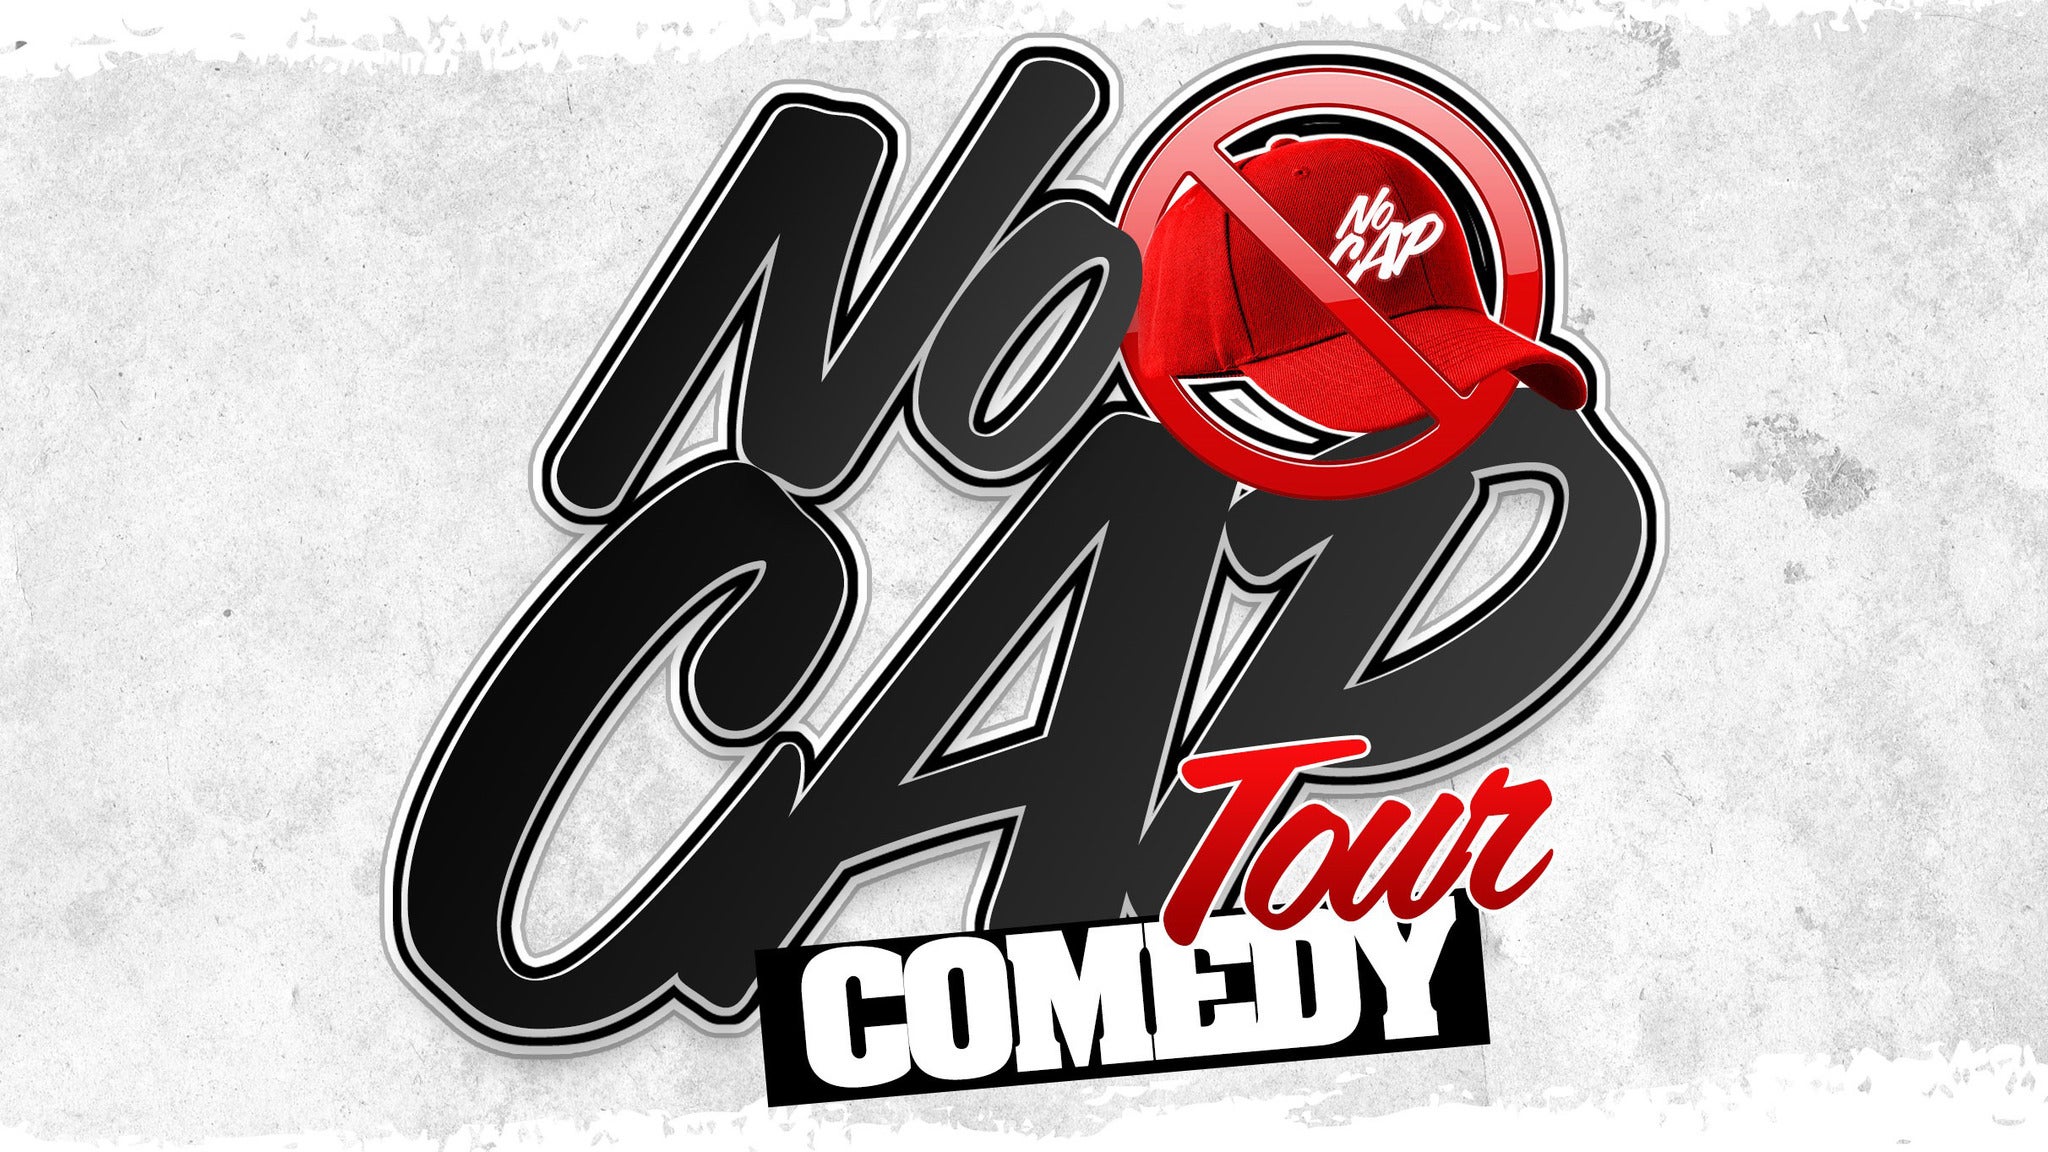 No Cap Comedy Tour presale password for concert tickets in Charlotte, NC (Bojangles Coliseum)